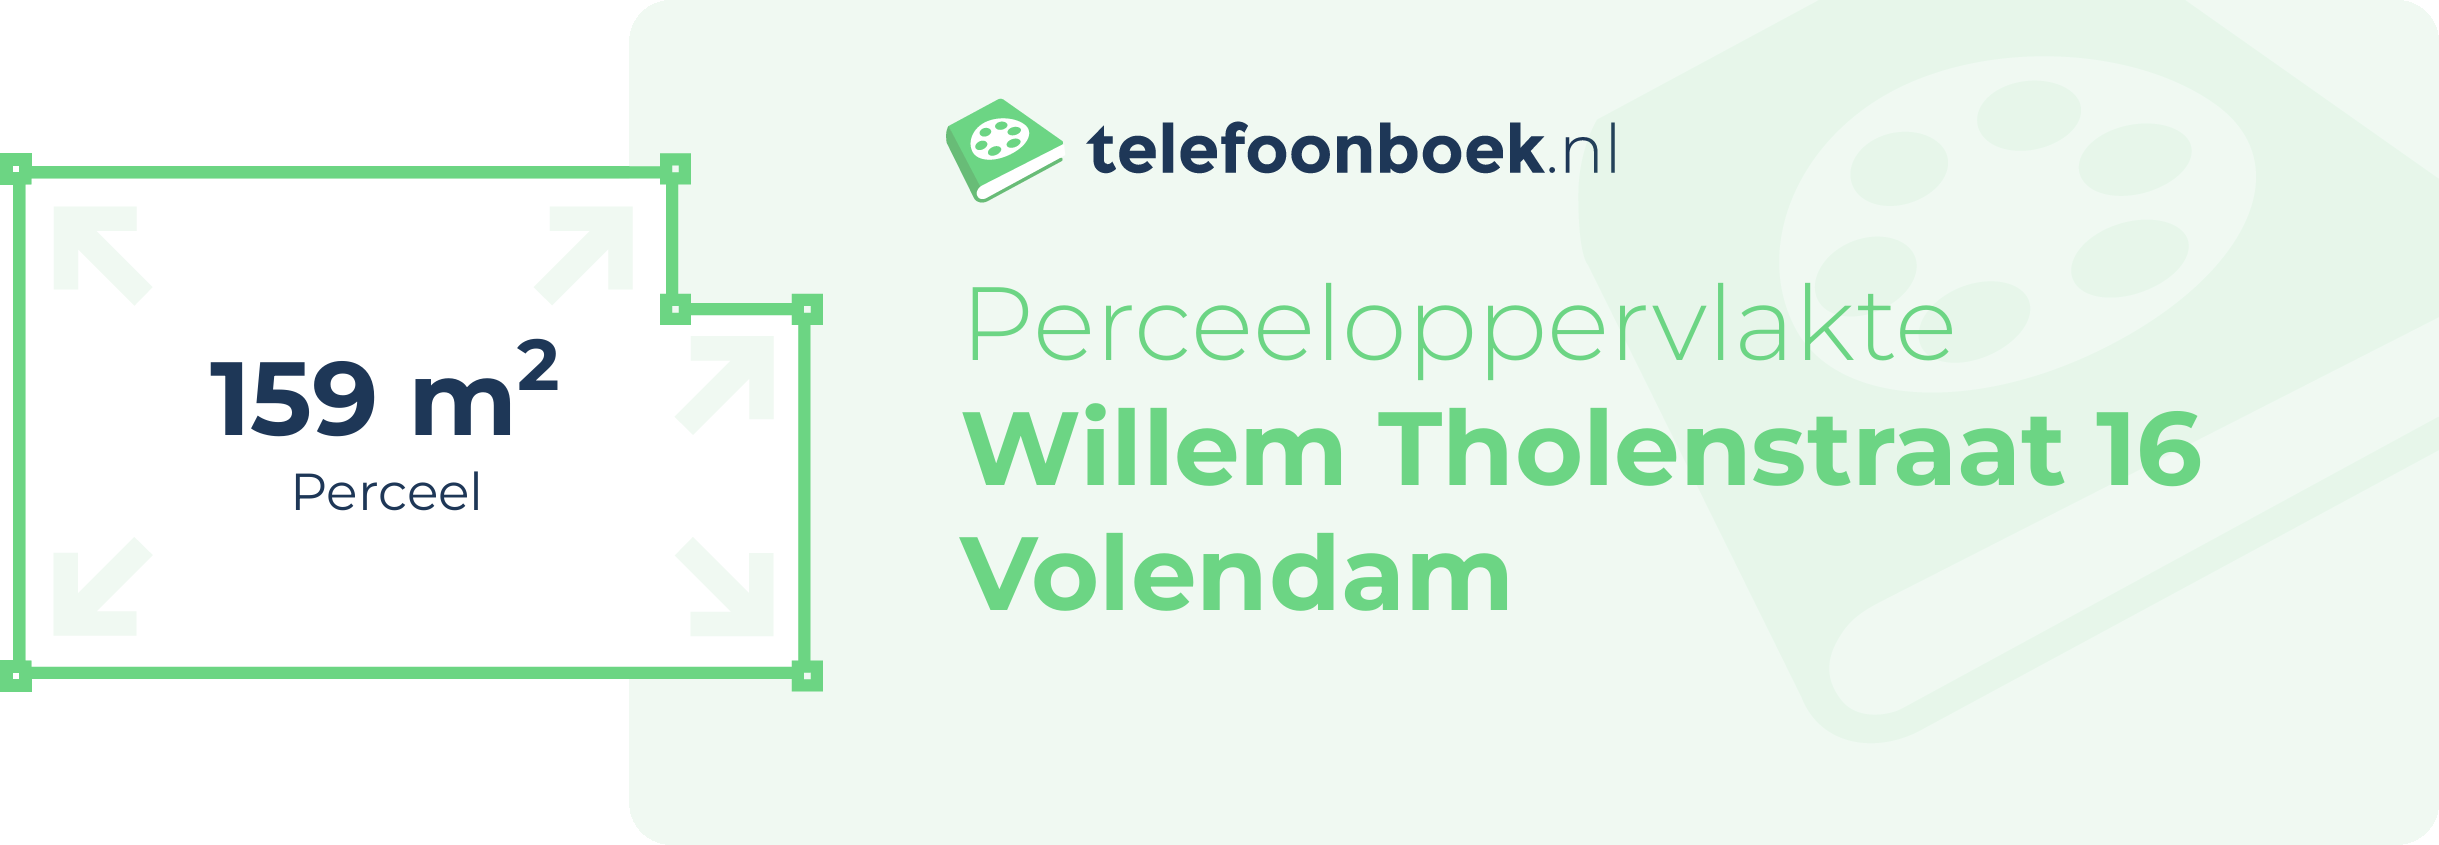 Perceeloppervlakte Willem Tholenstraat 16 Volendam